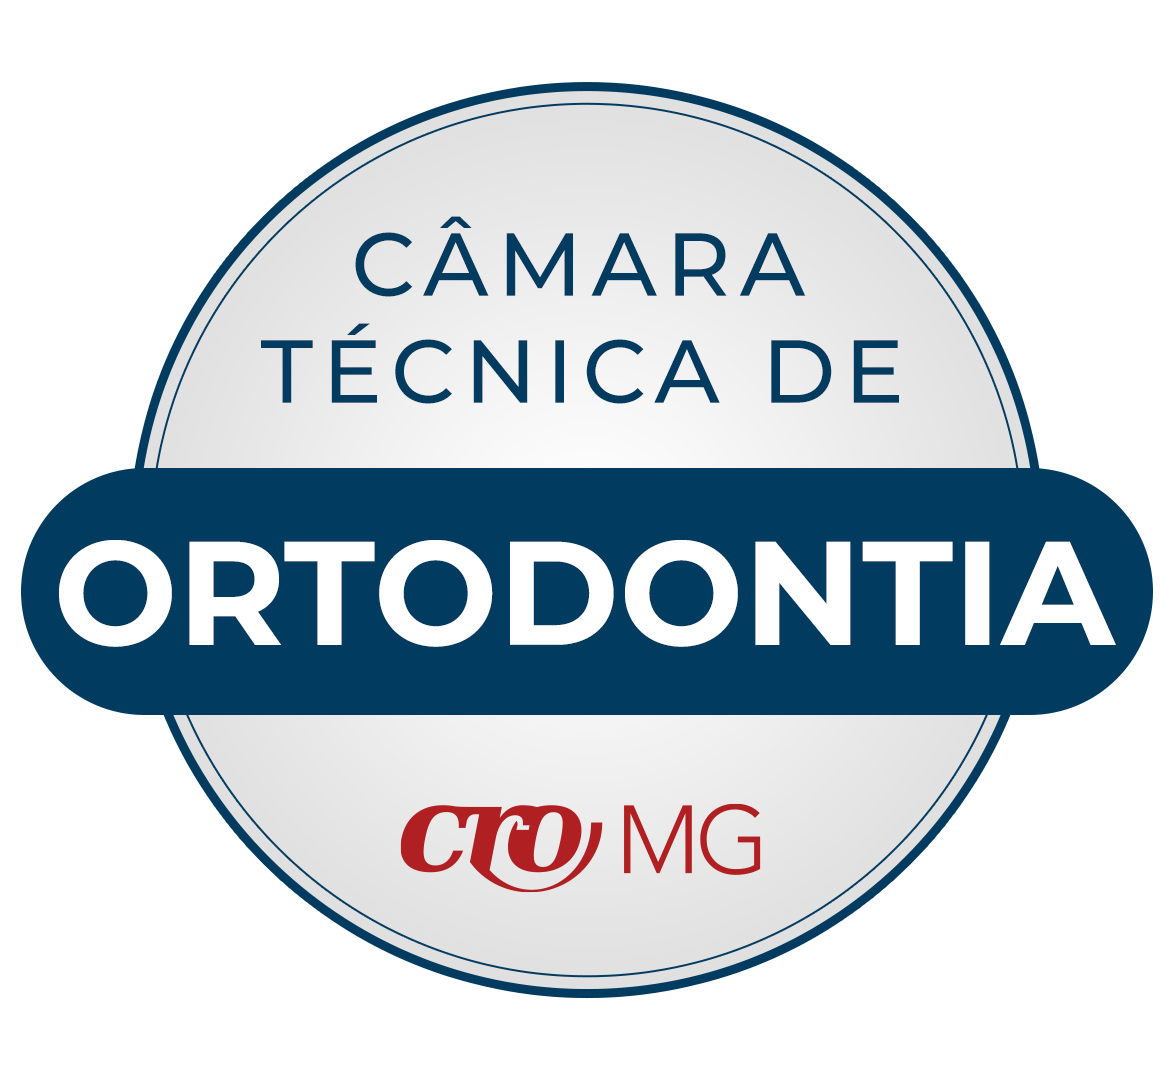 Camara Tecnica Ortodontia